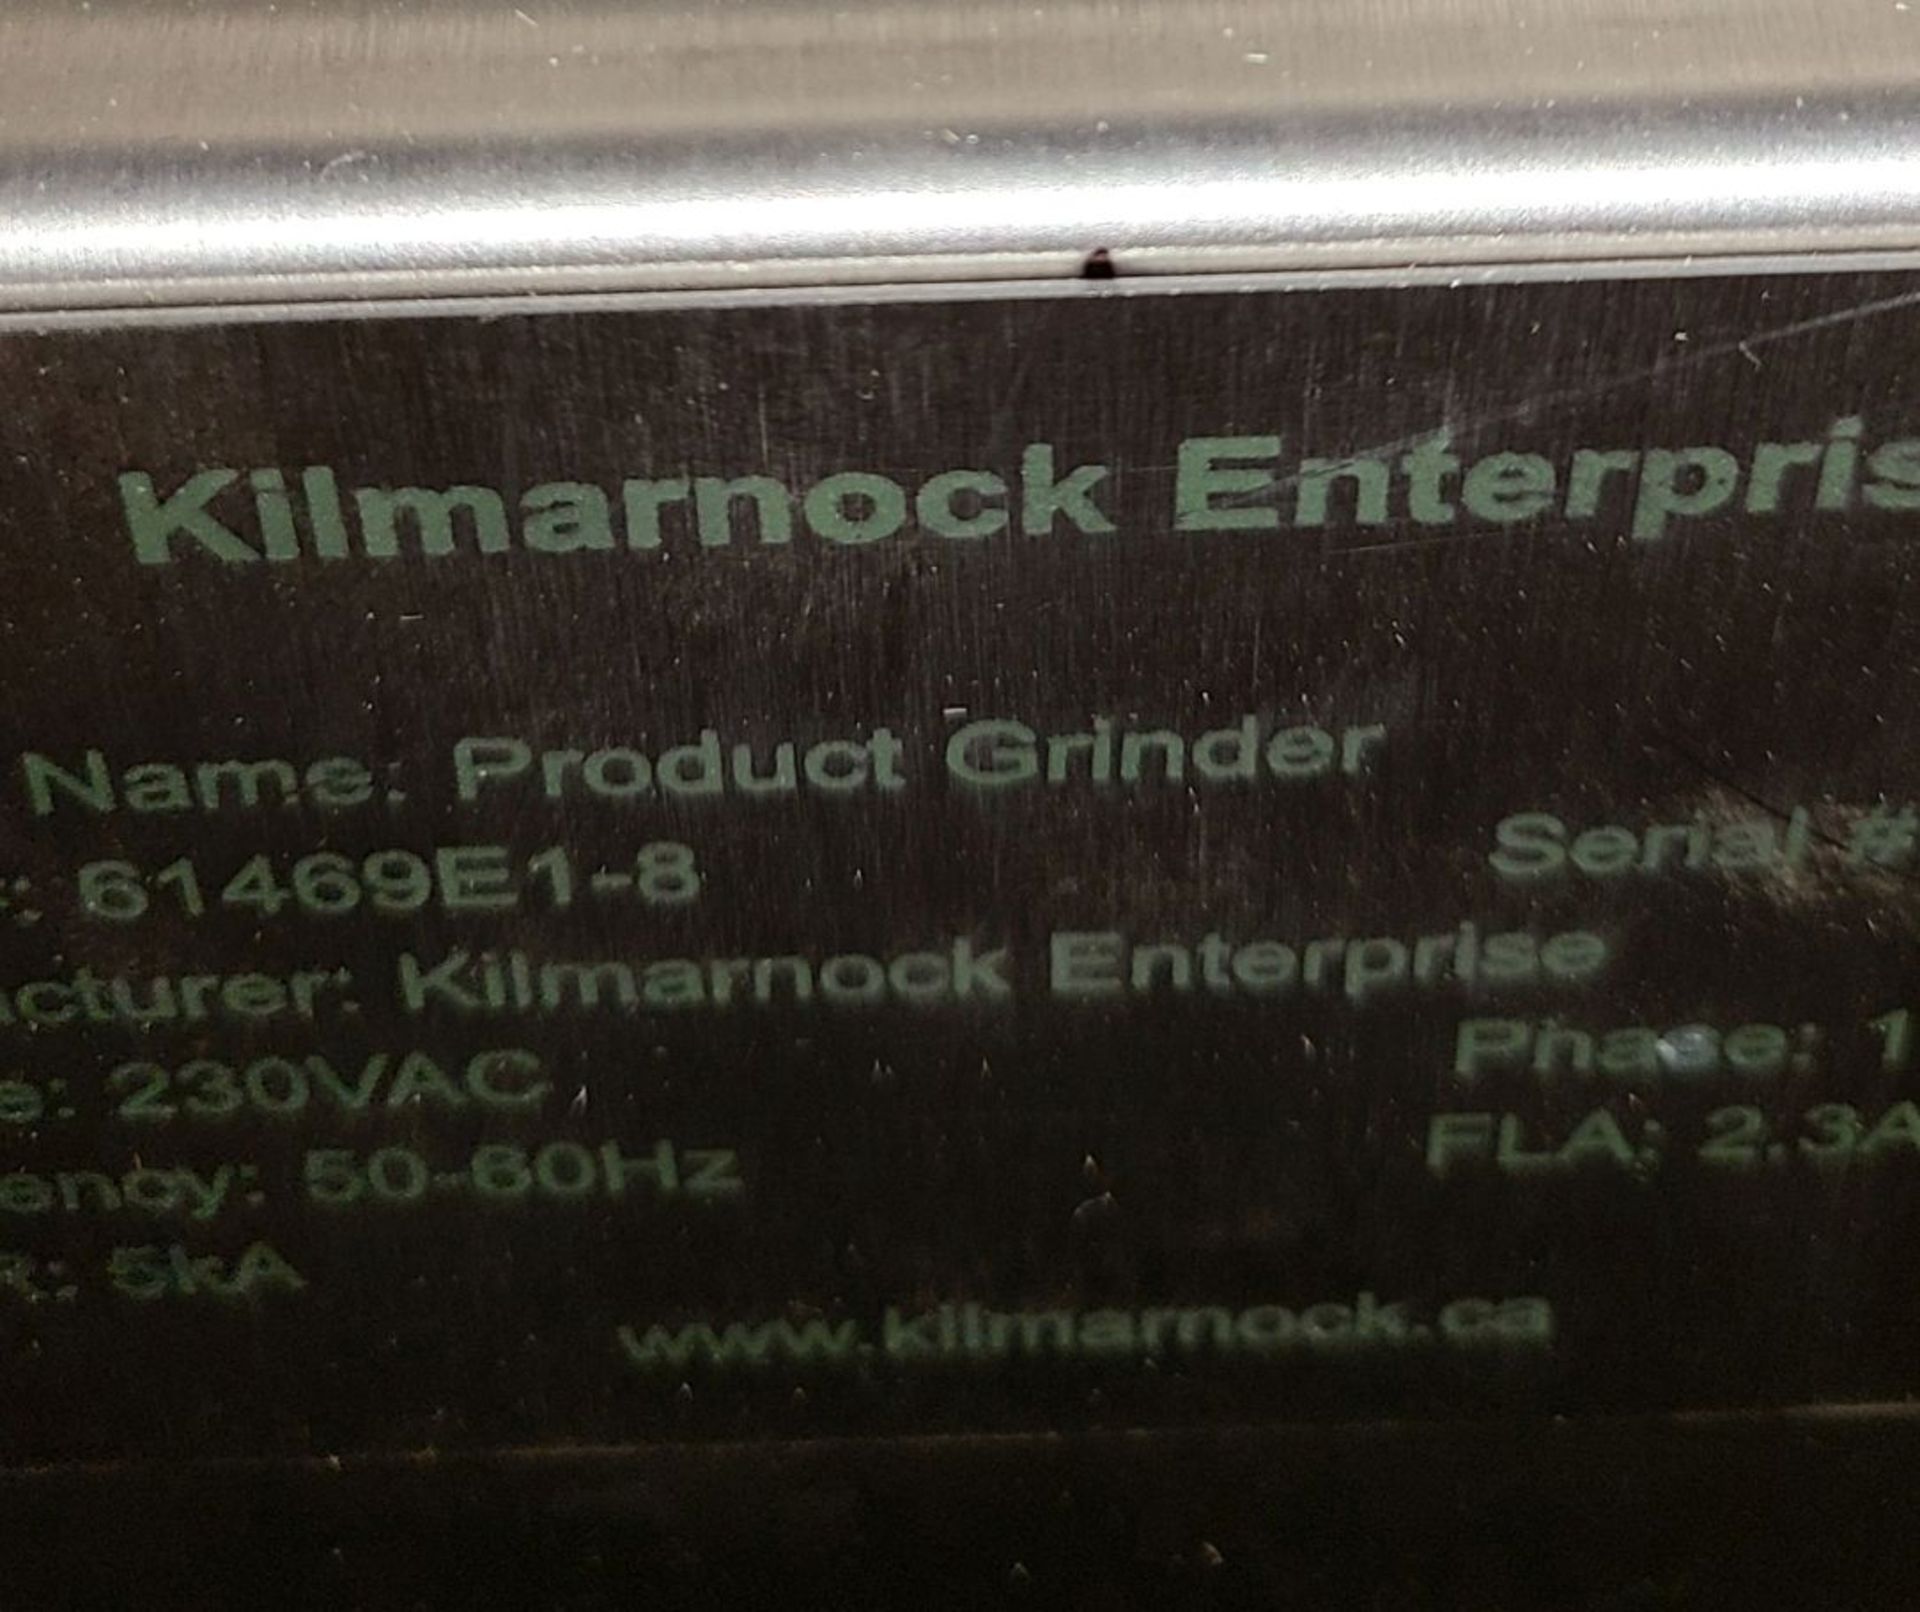 Lot of (3) Used Kilmarnock Tweed Grinder.Model Product Grinder. - Image 5 of 7